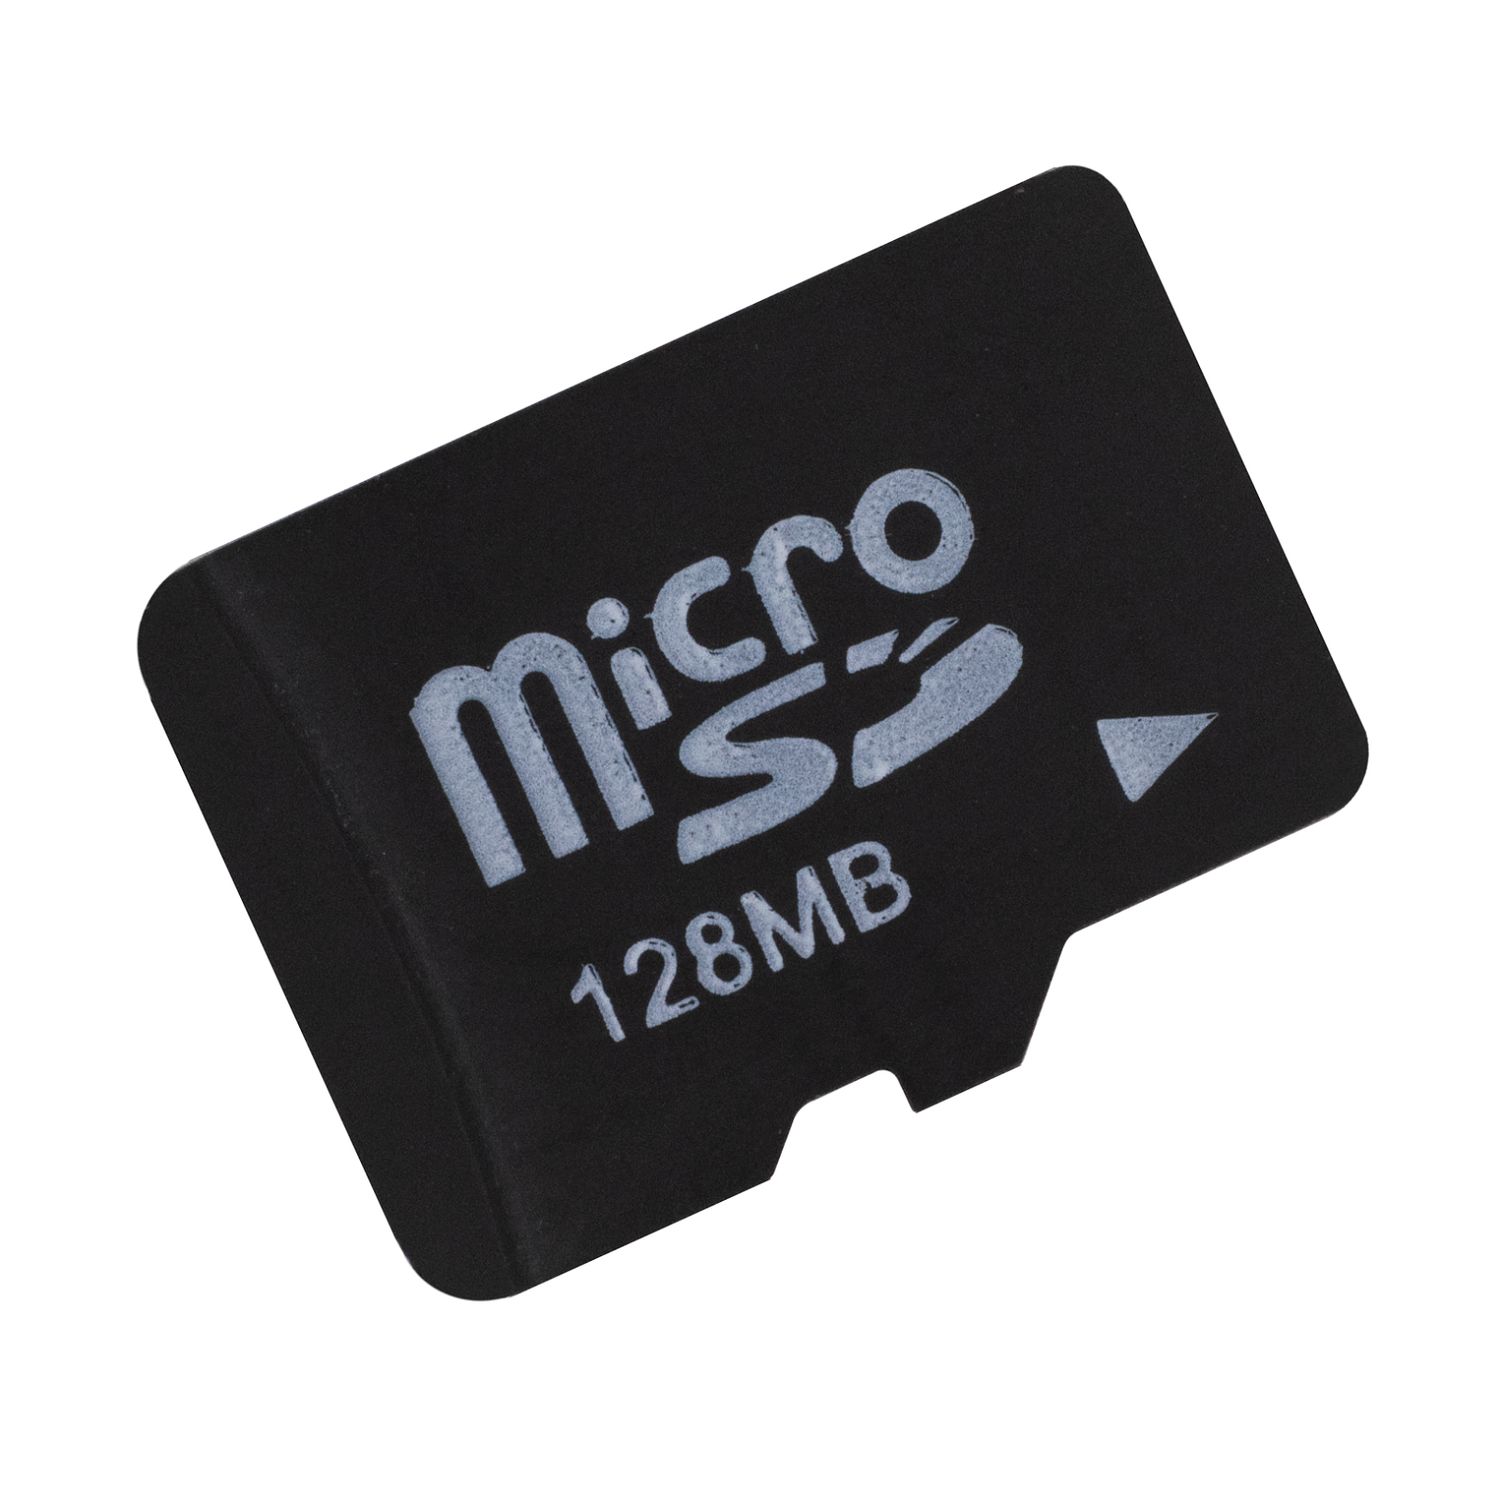 Карта памяти Micro SD 128 Мб